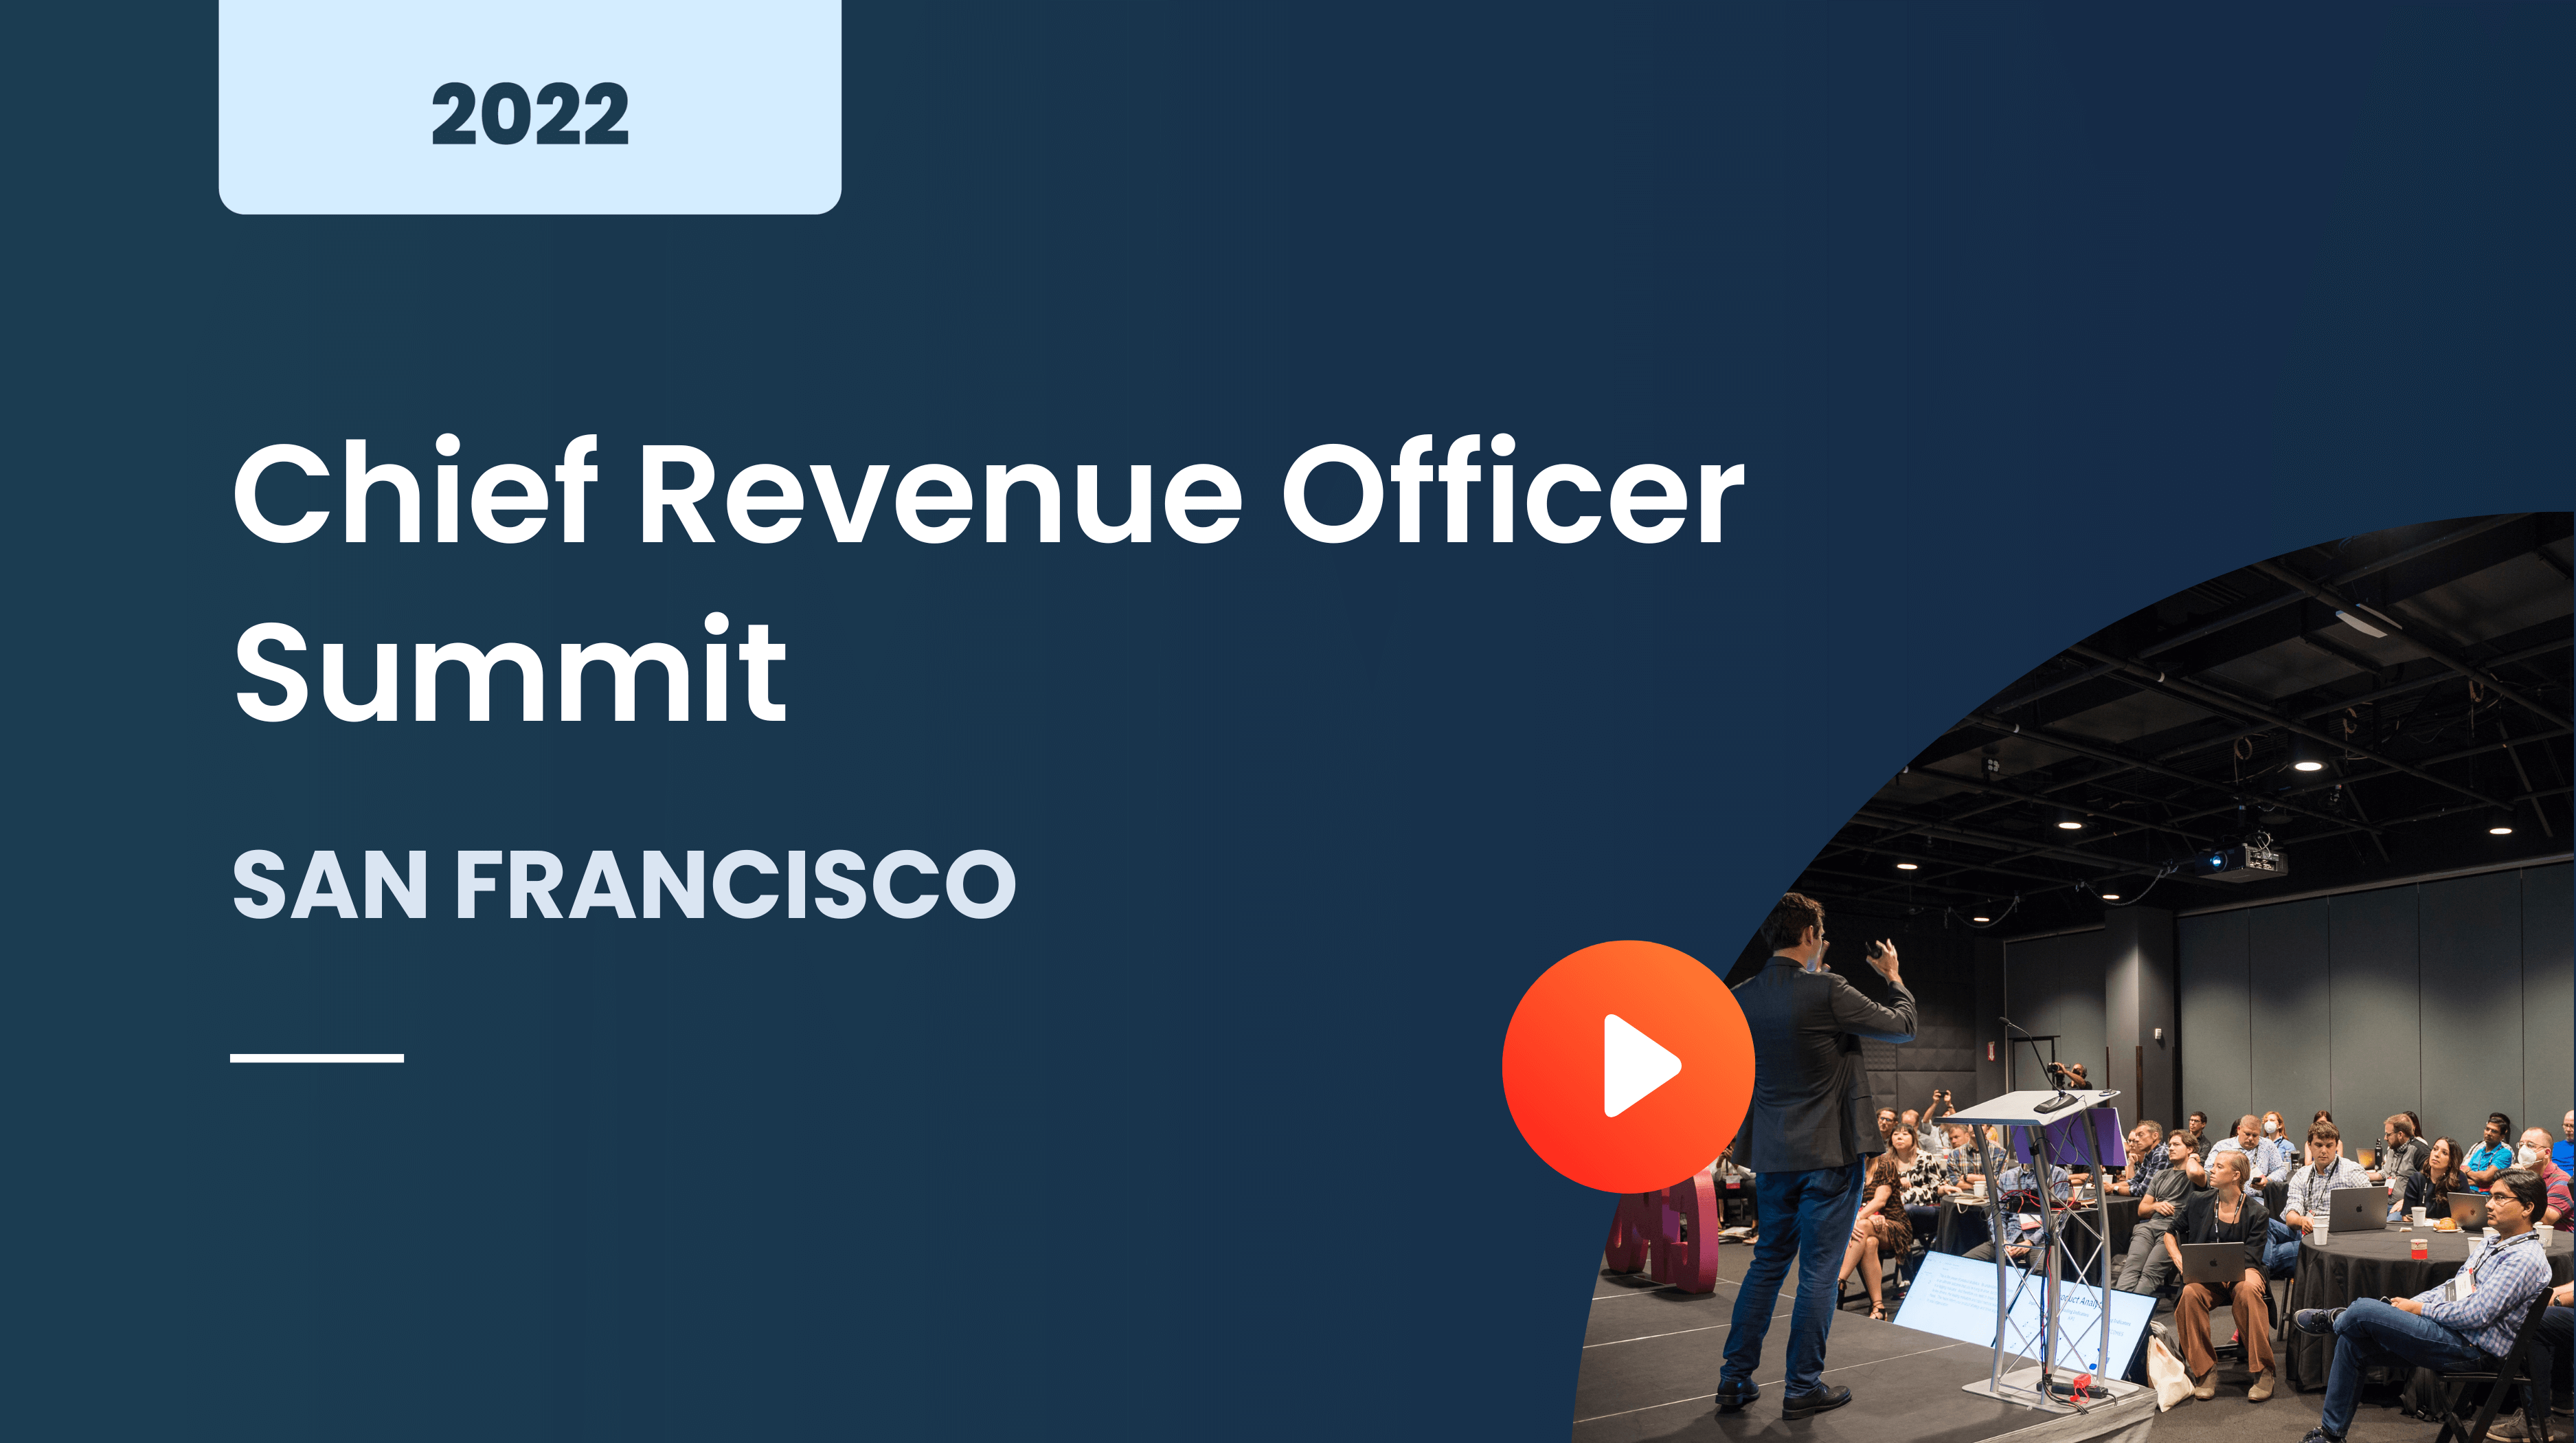 Chief Revenue Officer Summit San Francisco 2022